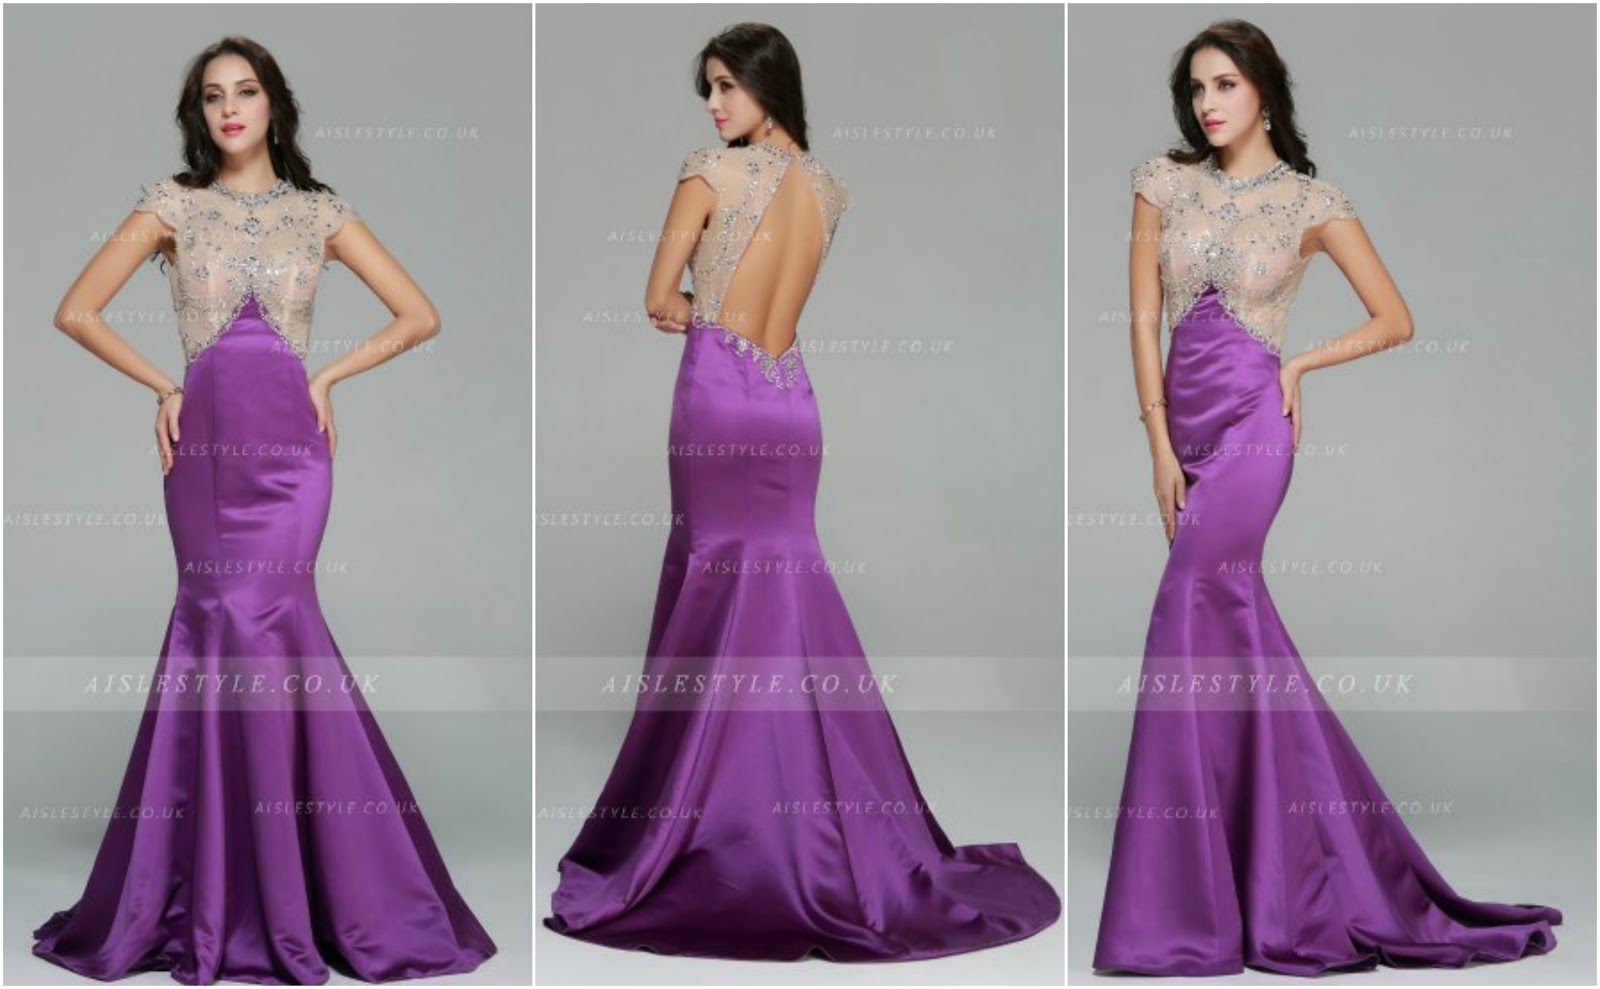 Extravagant & Glamorous Prom Dresses Inspiration From Aisle Style ...